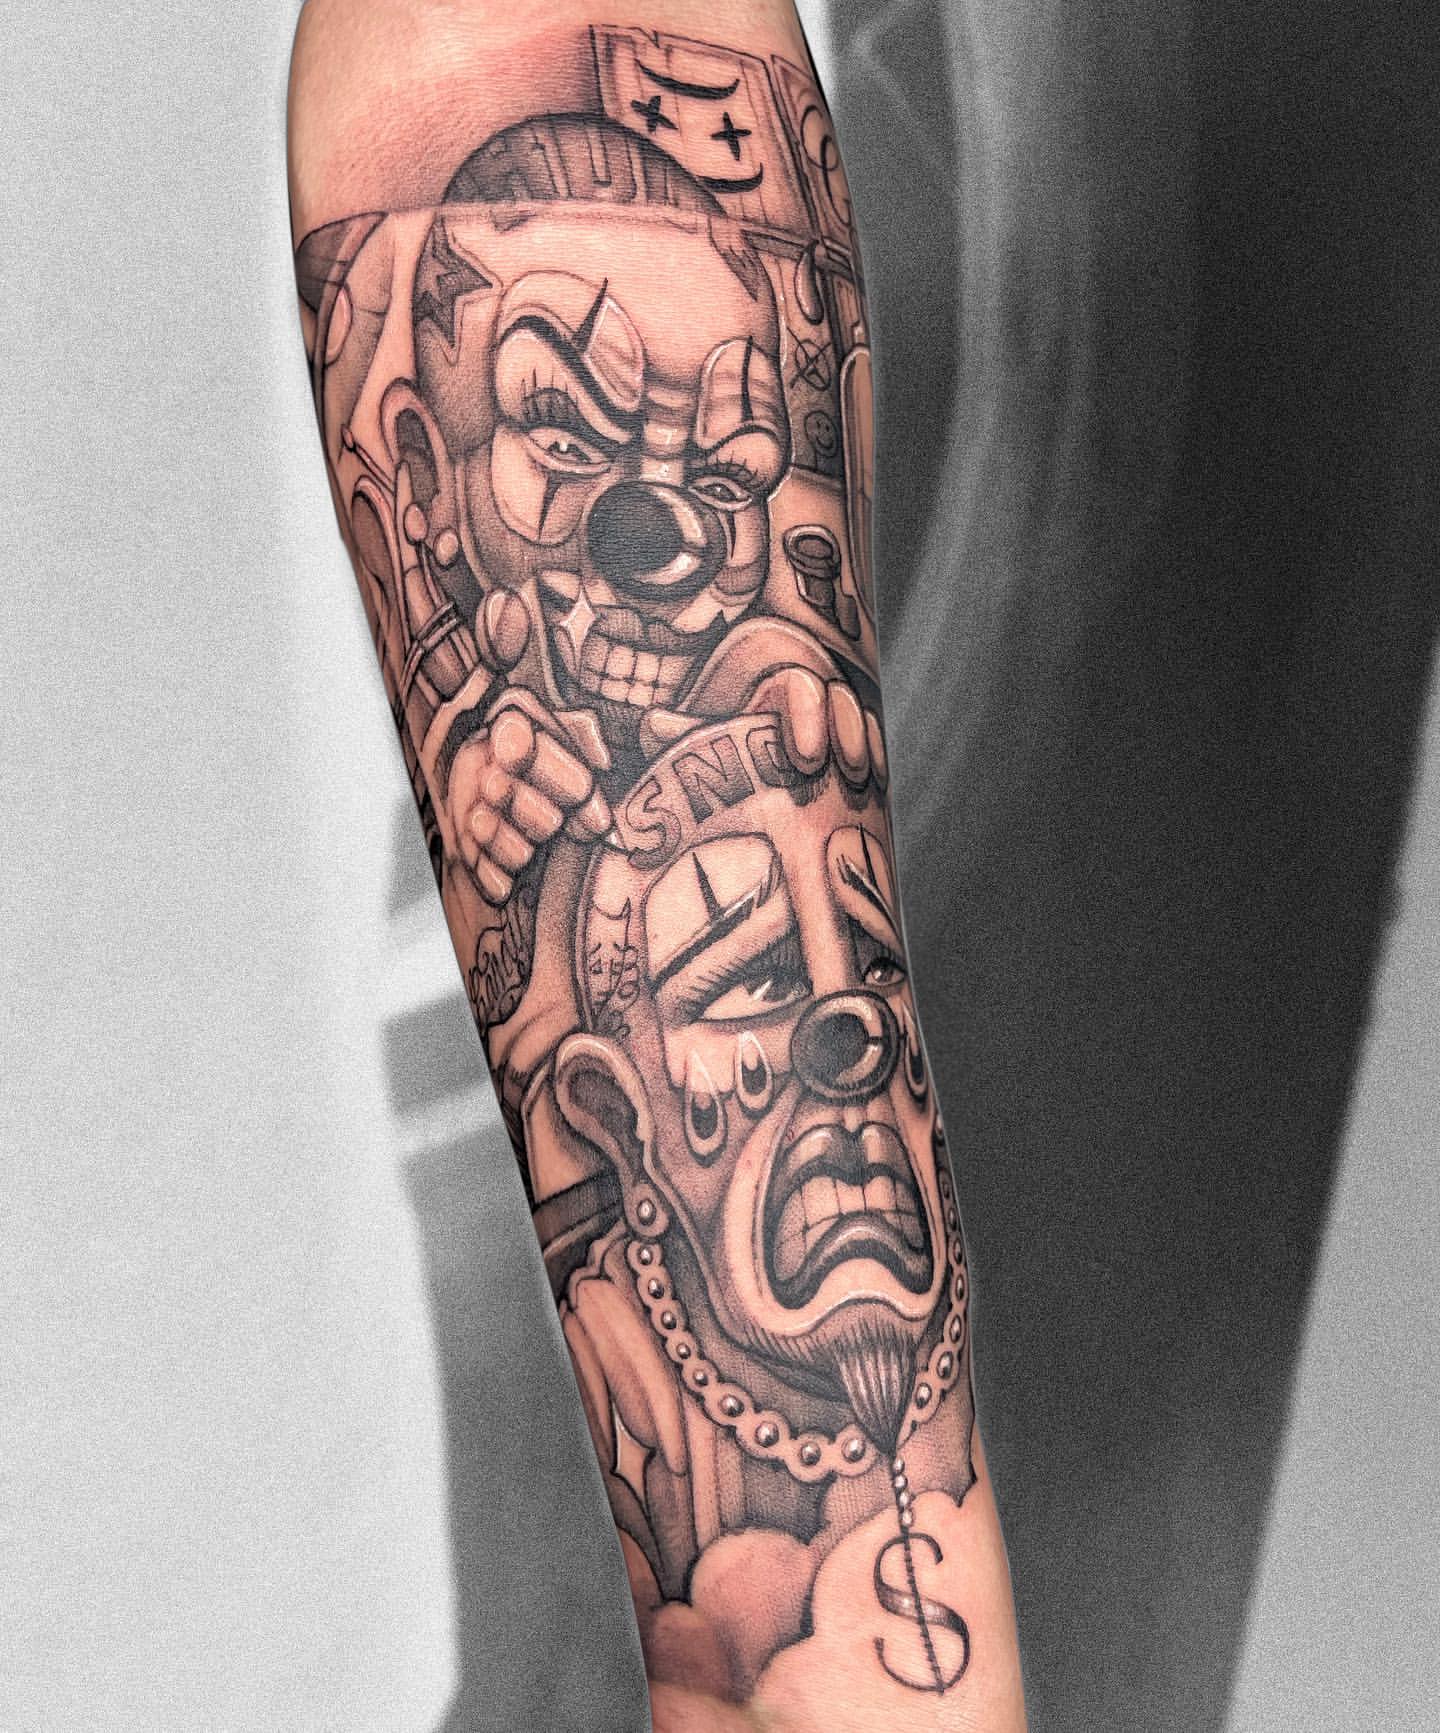 Chicano Themed Temporary Tattoos | Gumball.com